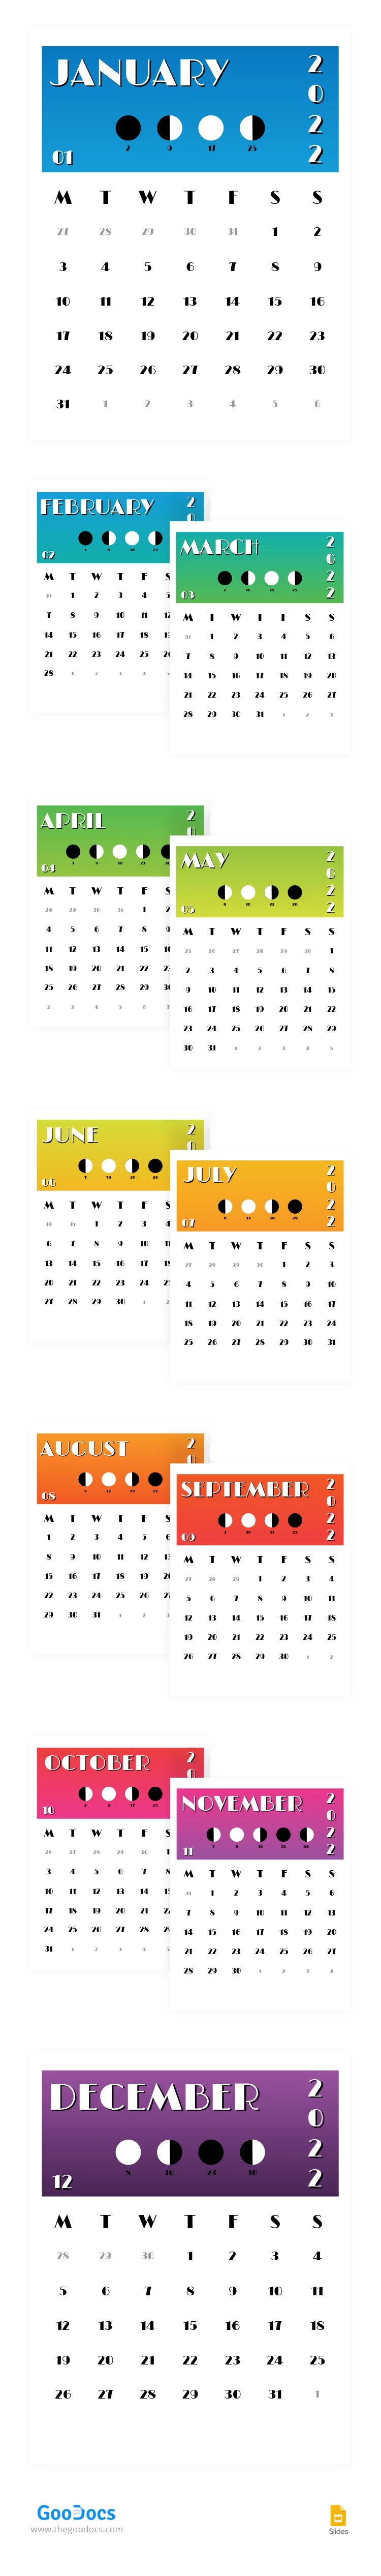 Calendario Gradient Simple - free Google Docs Template - 10063805